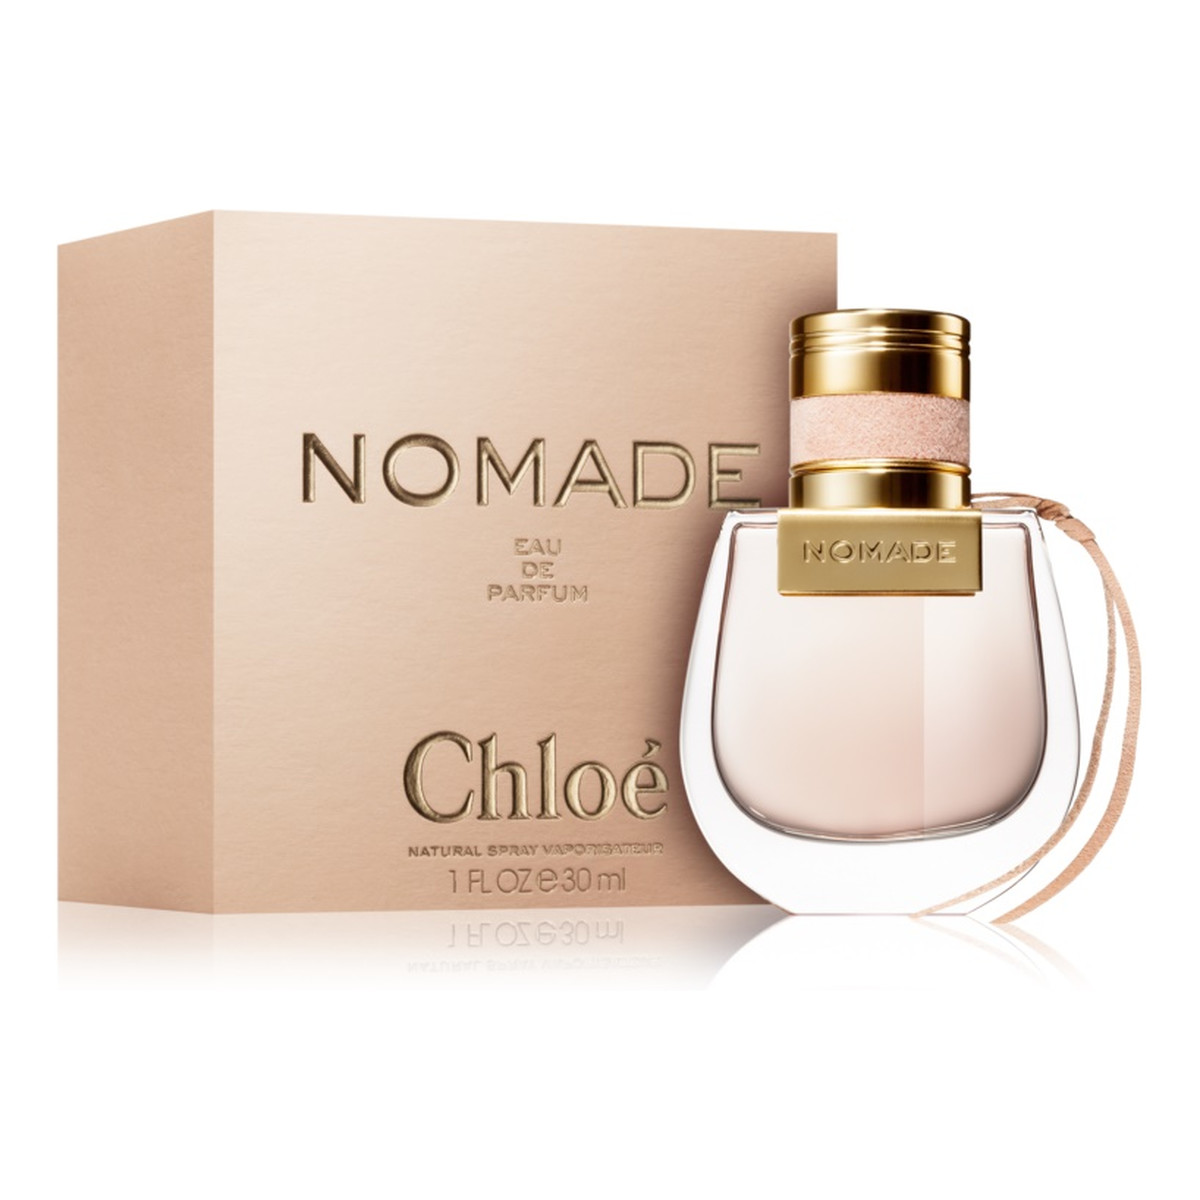 Chloe Nomade woda perfumowana 30ml